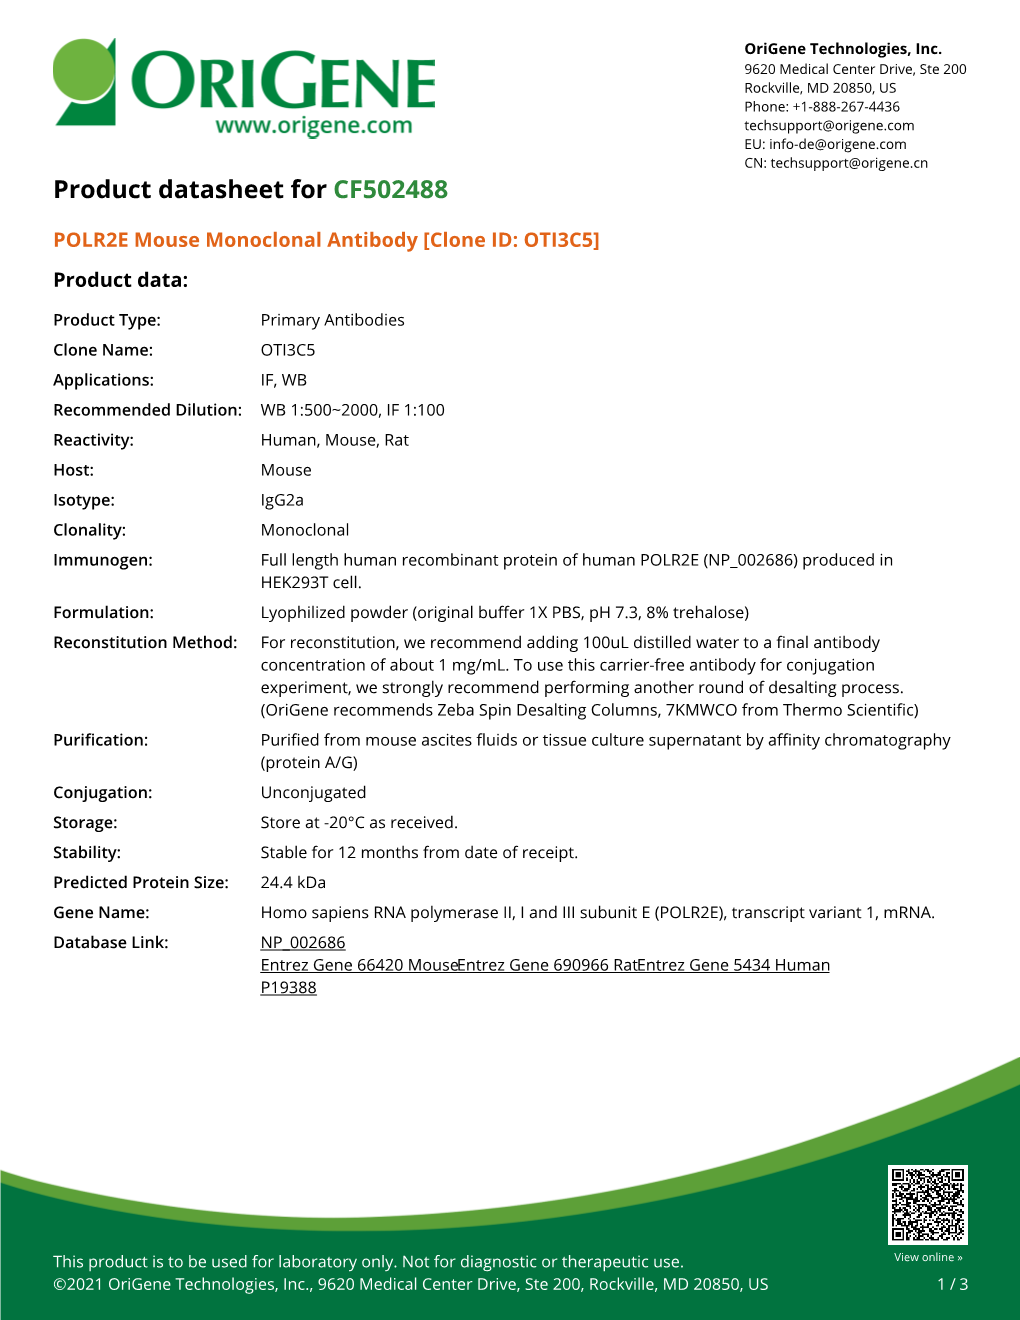 POLR2E Mouse Monoclonal Antibody [Clone ID: OTI3C5] – CF502488